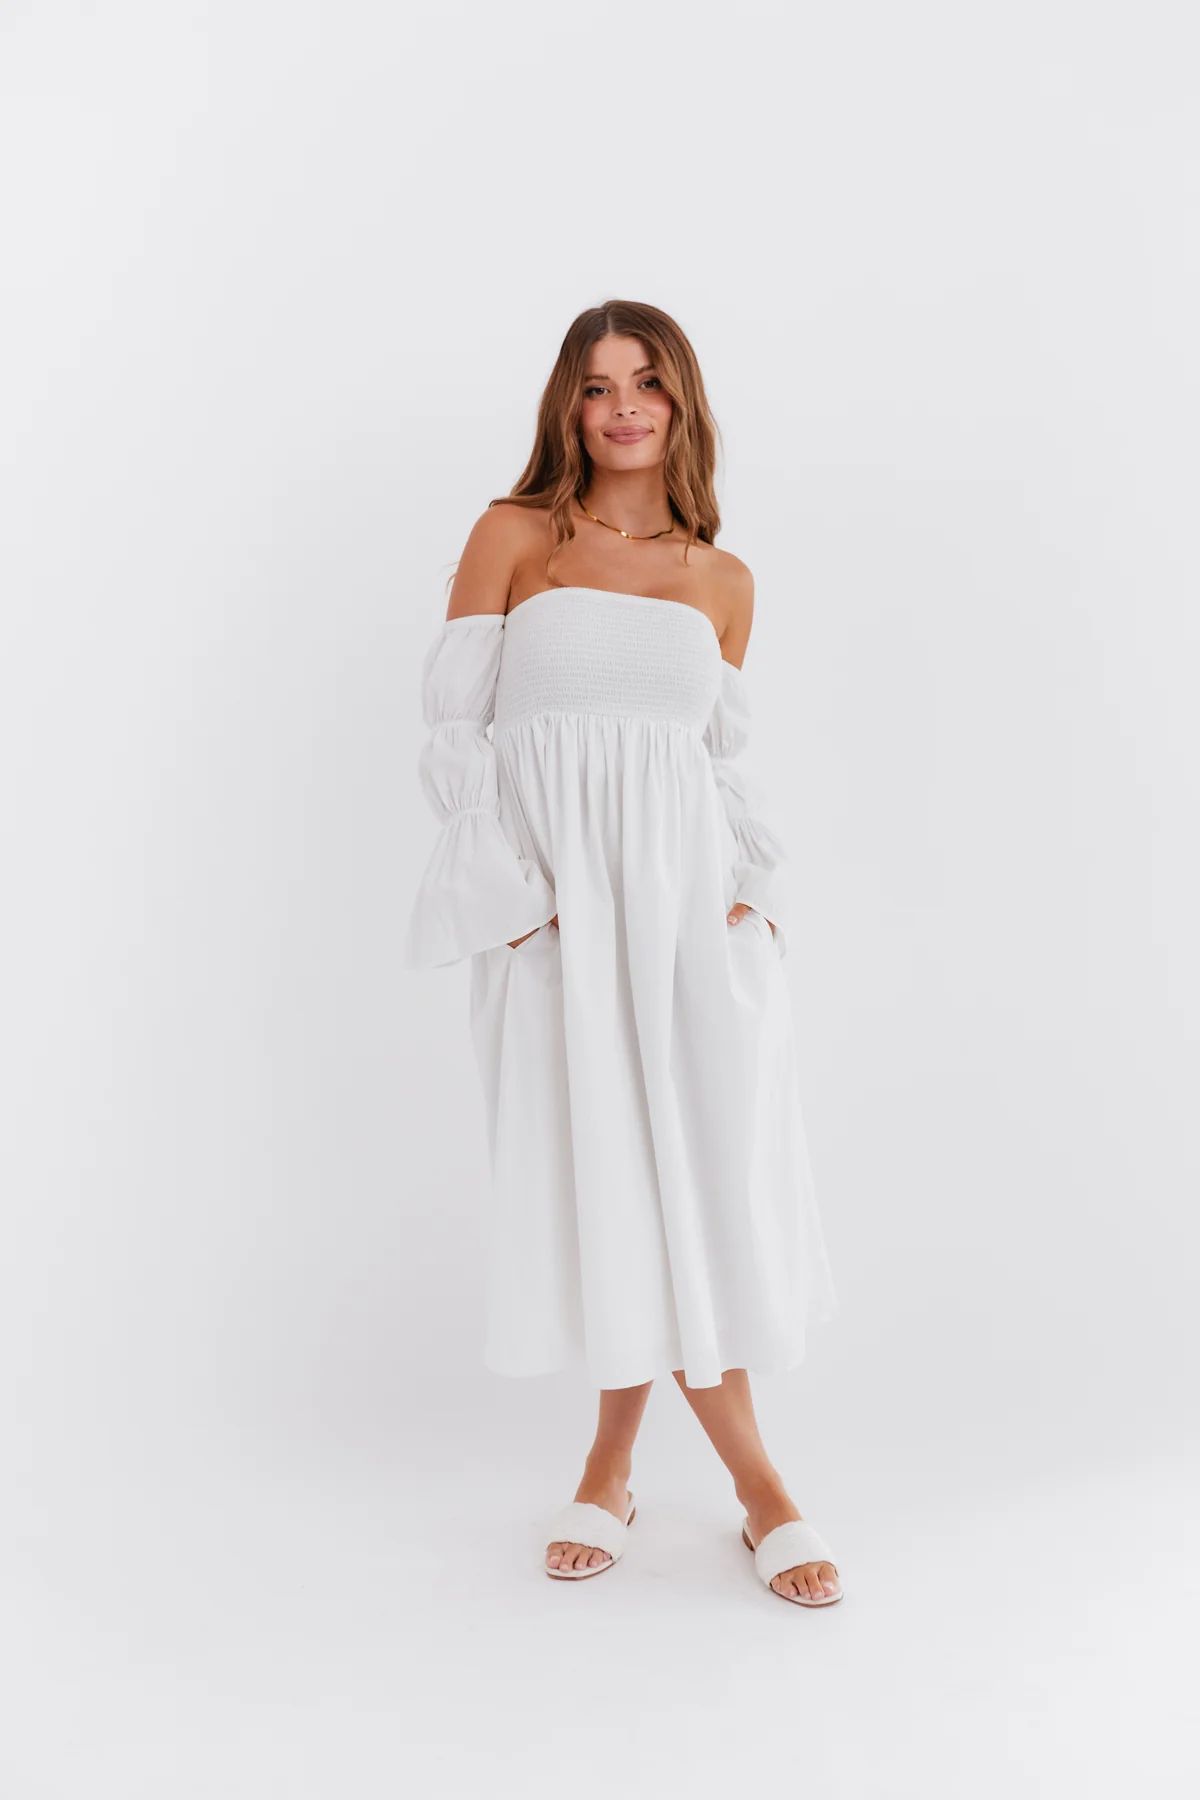 MAGNOLIA WHITE MAXI DRESS | Kittenish